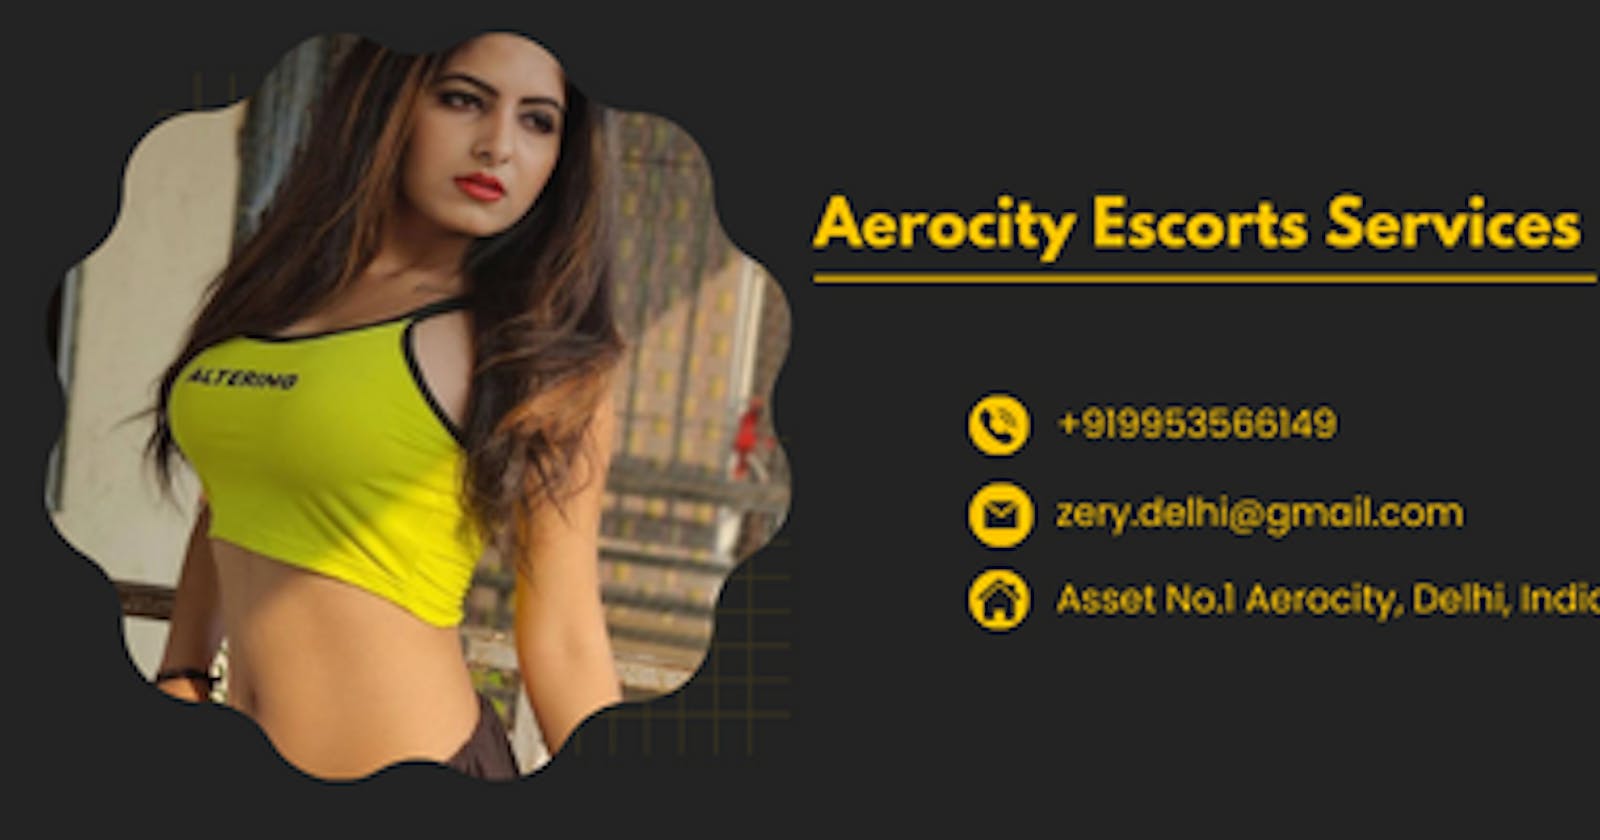 Aerocity Escorts Services Offering Beautiful Delhi Escorts in Aerocity